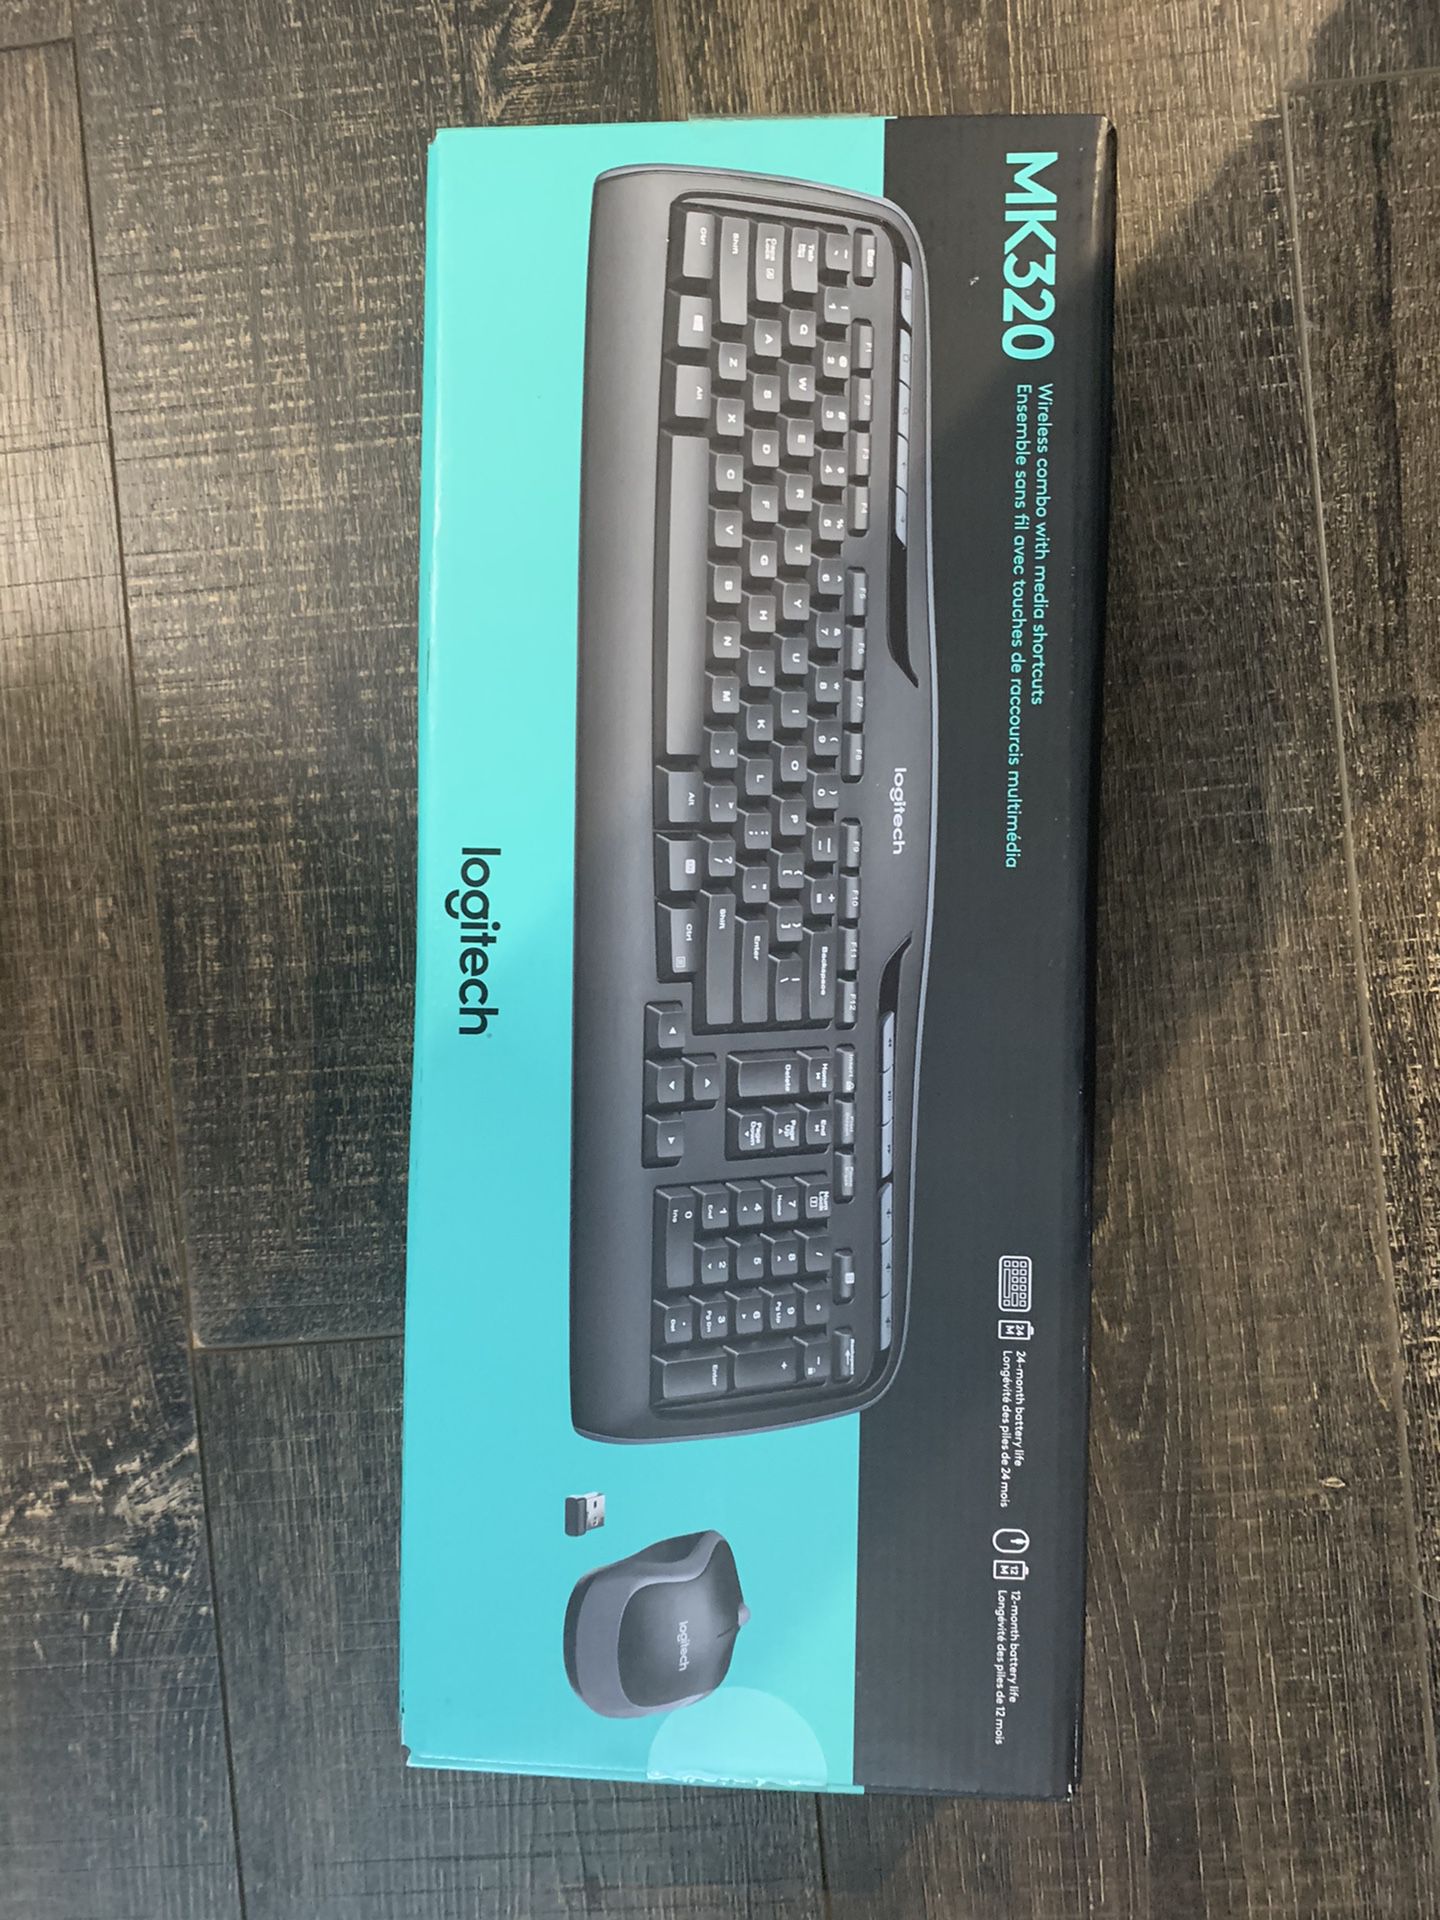 Brand new Logitech wireless keyboard and mouse